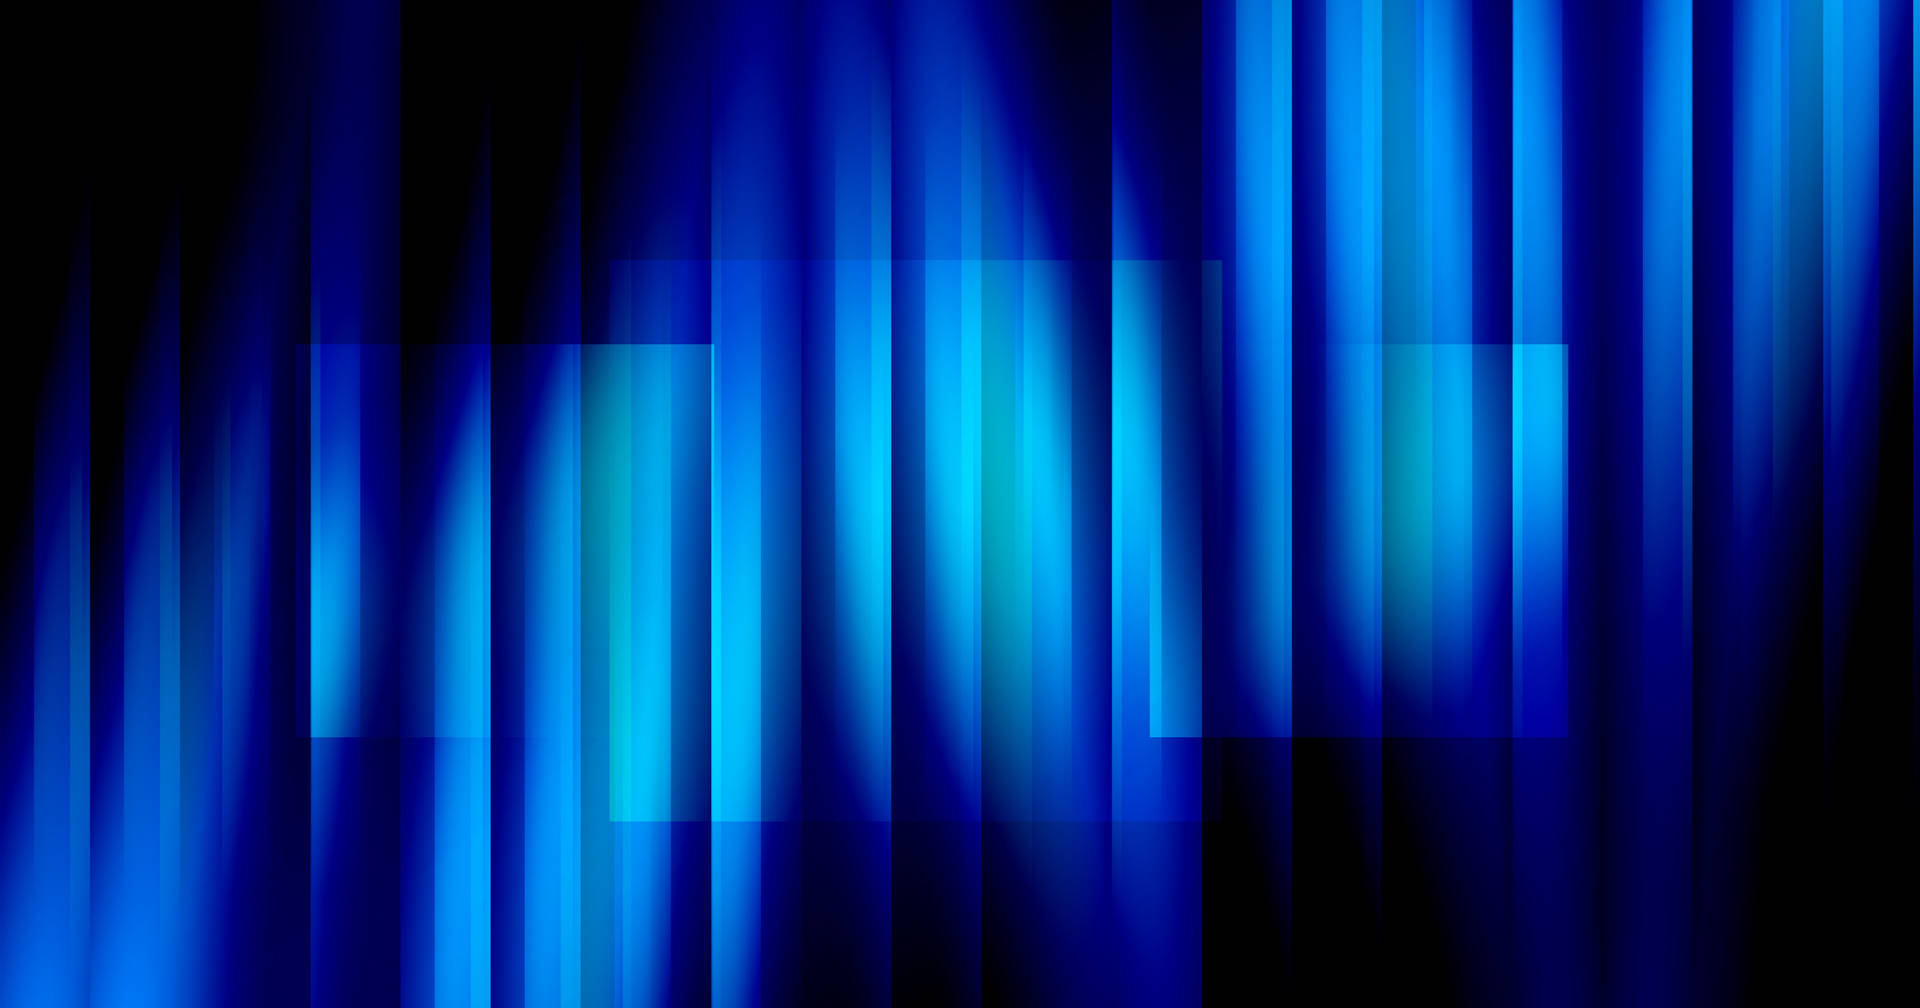 Dark Blue Aesthetic Vertical Strips Background